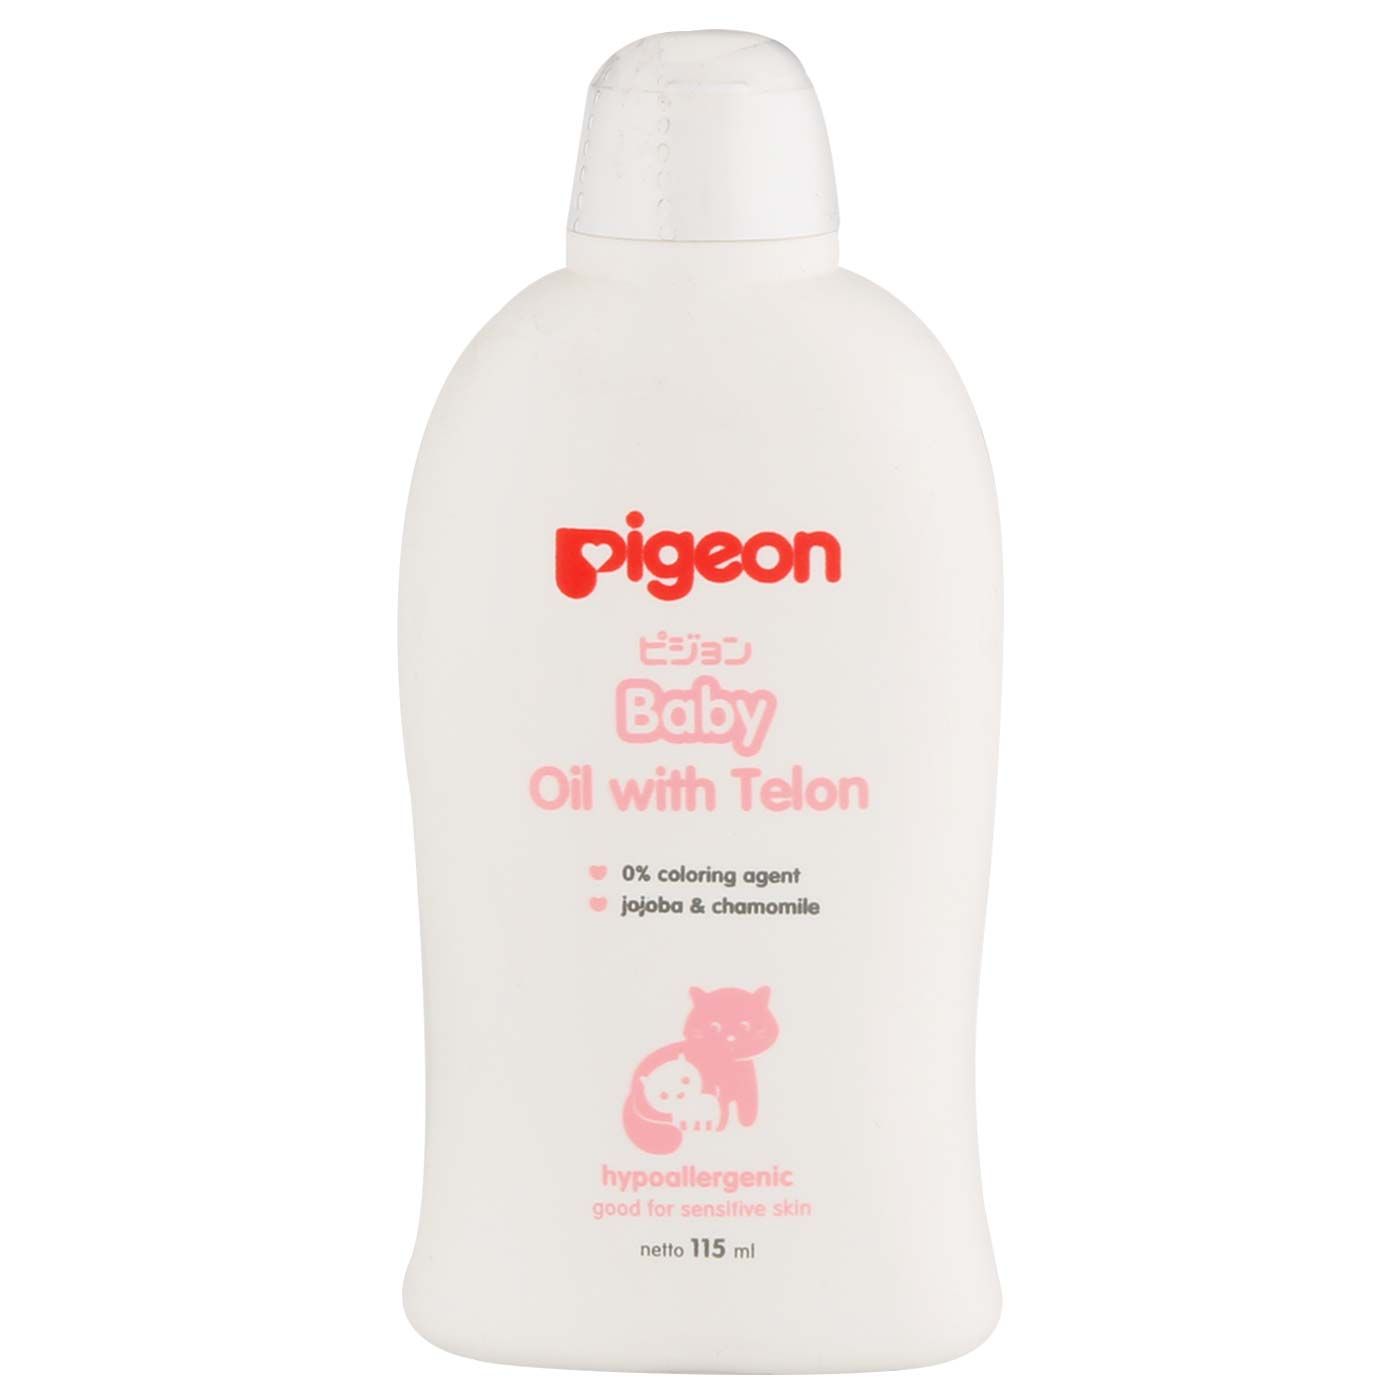 Pigeon Baby Oil With Telon 115ml - 1